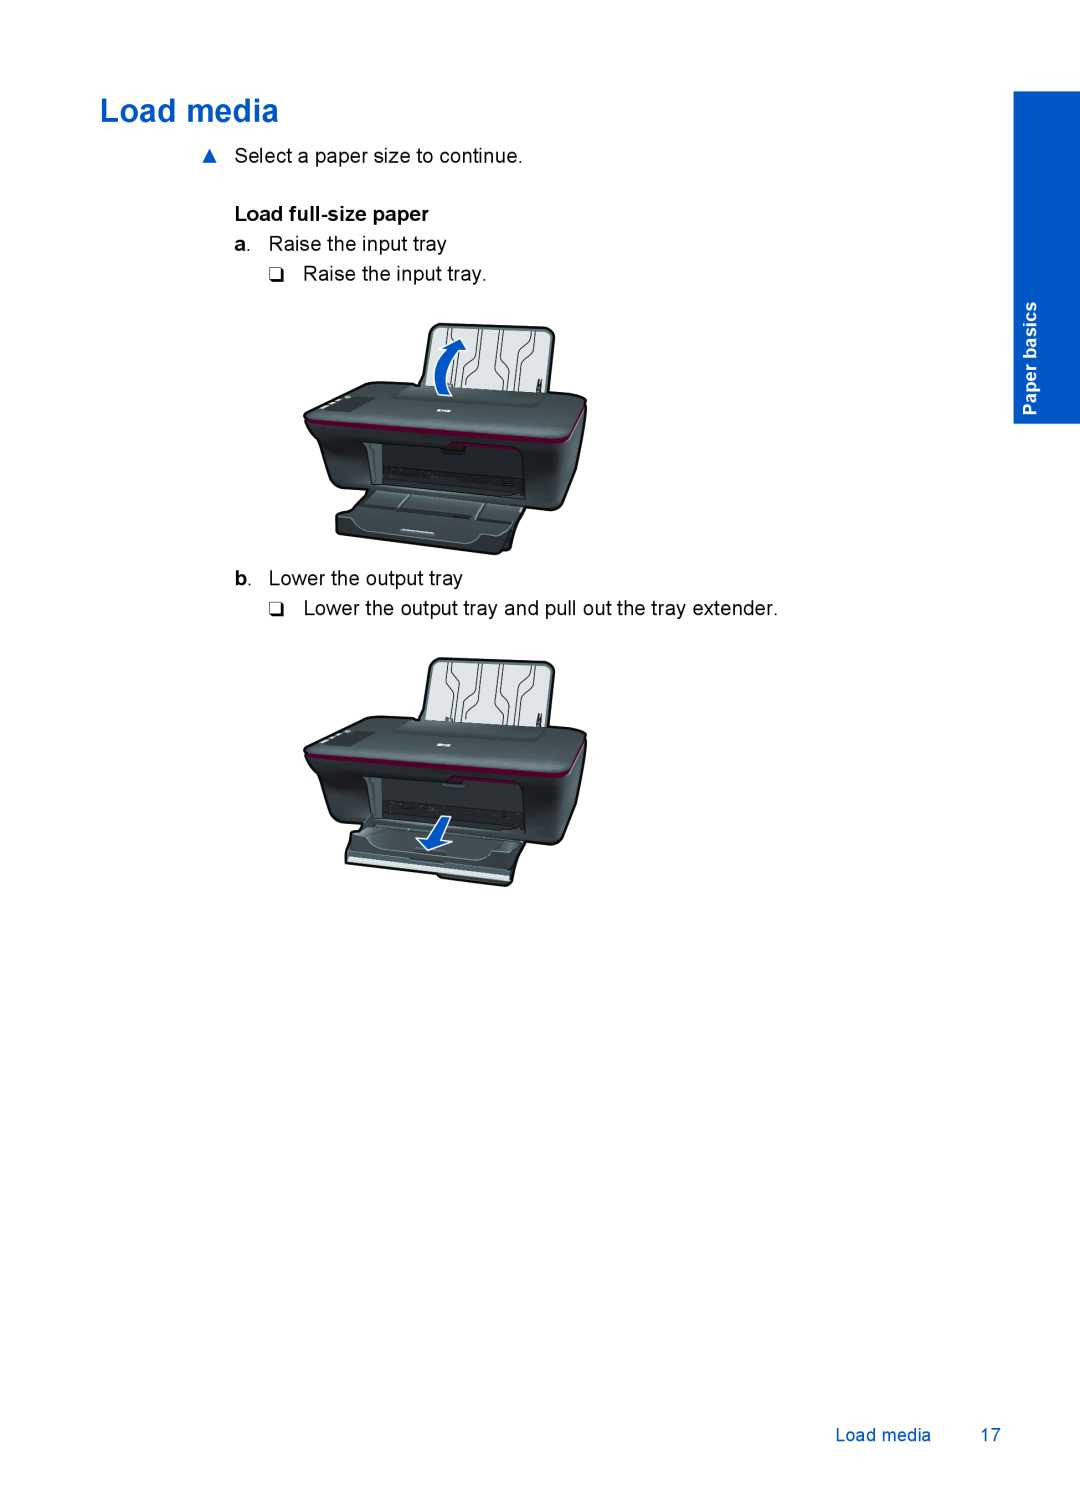 HP 1055 - J410e, 1051, 1050 - J410a, 1056 - J410a Load media, Load full-size paper a. Raise the input tray, Paper basics 